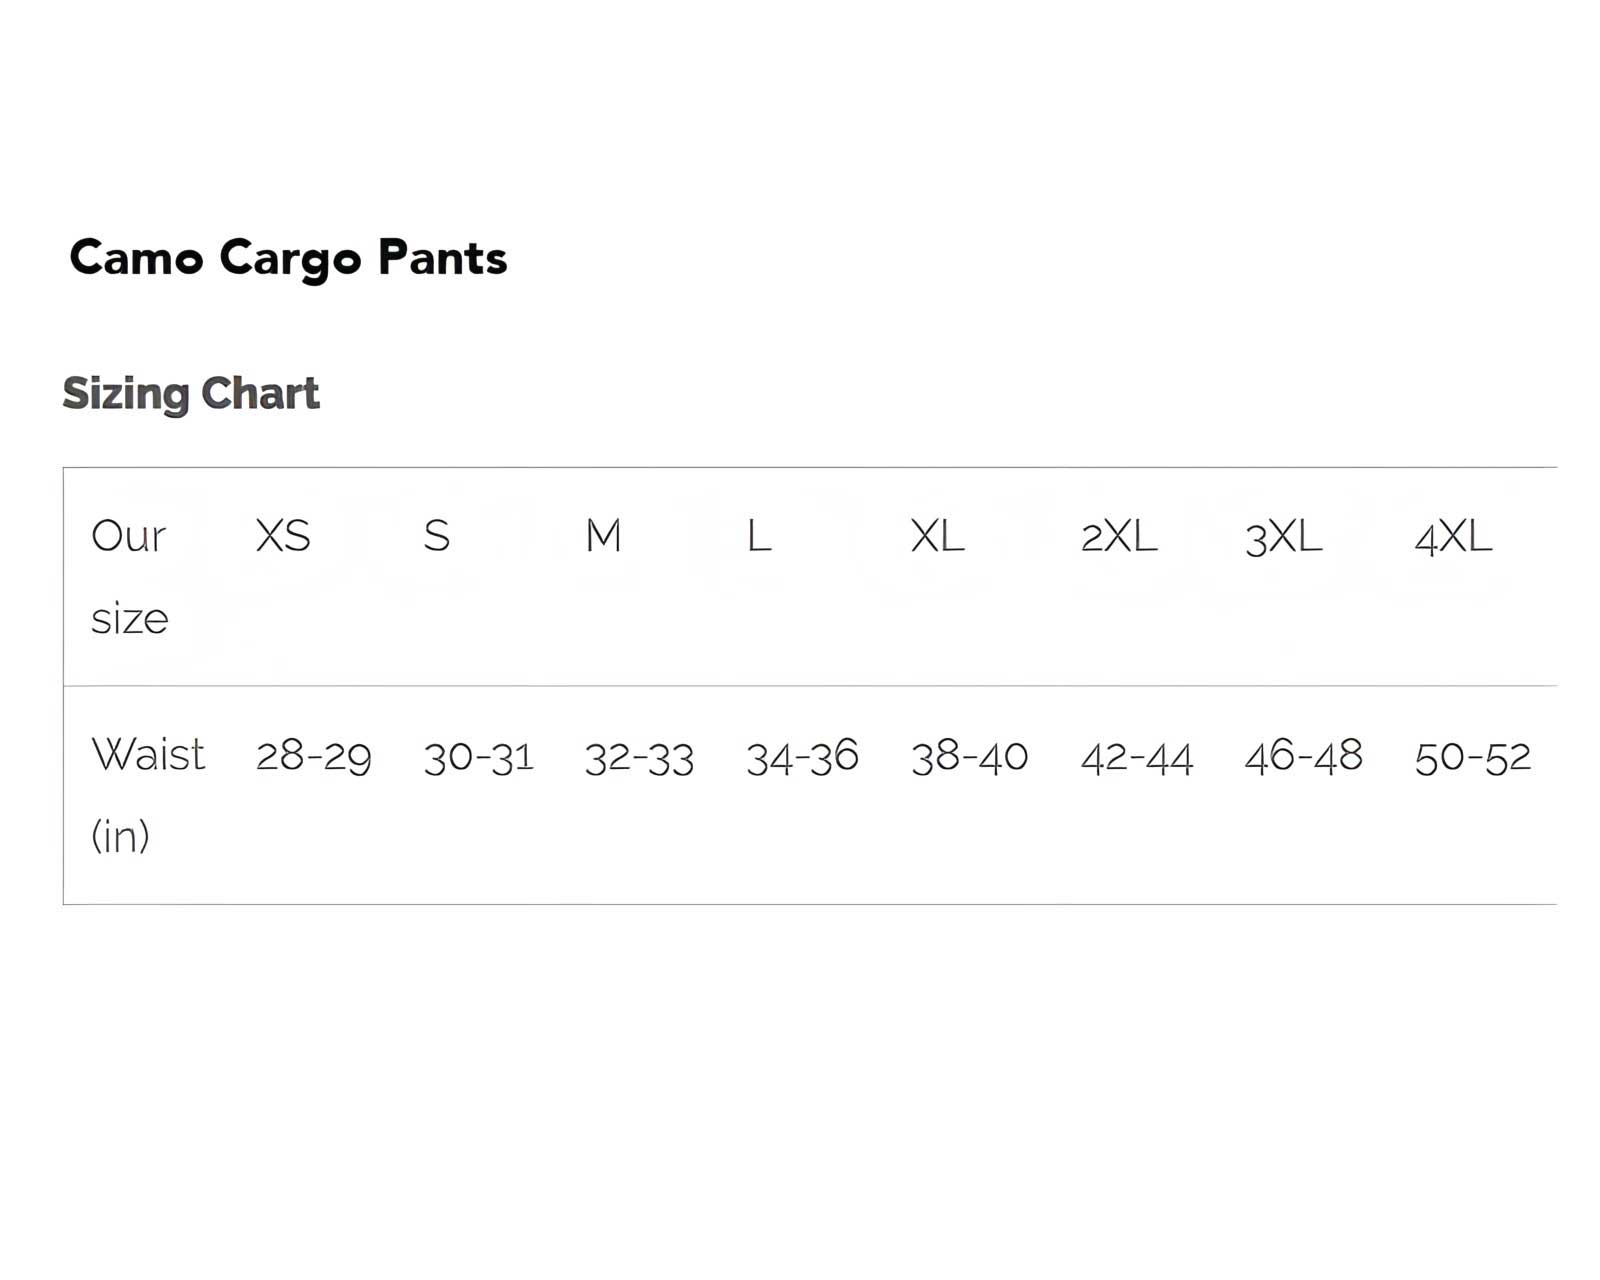 Camo Cargo Pants - Size Chart